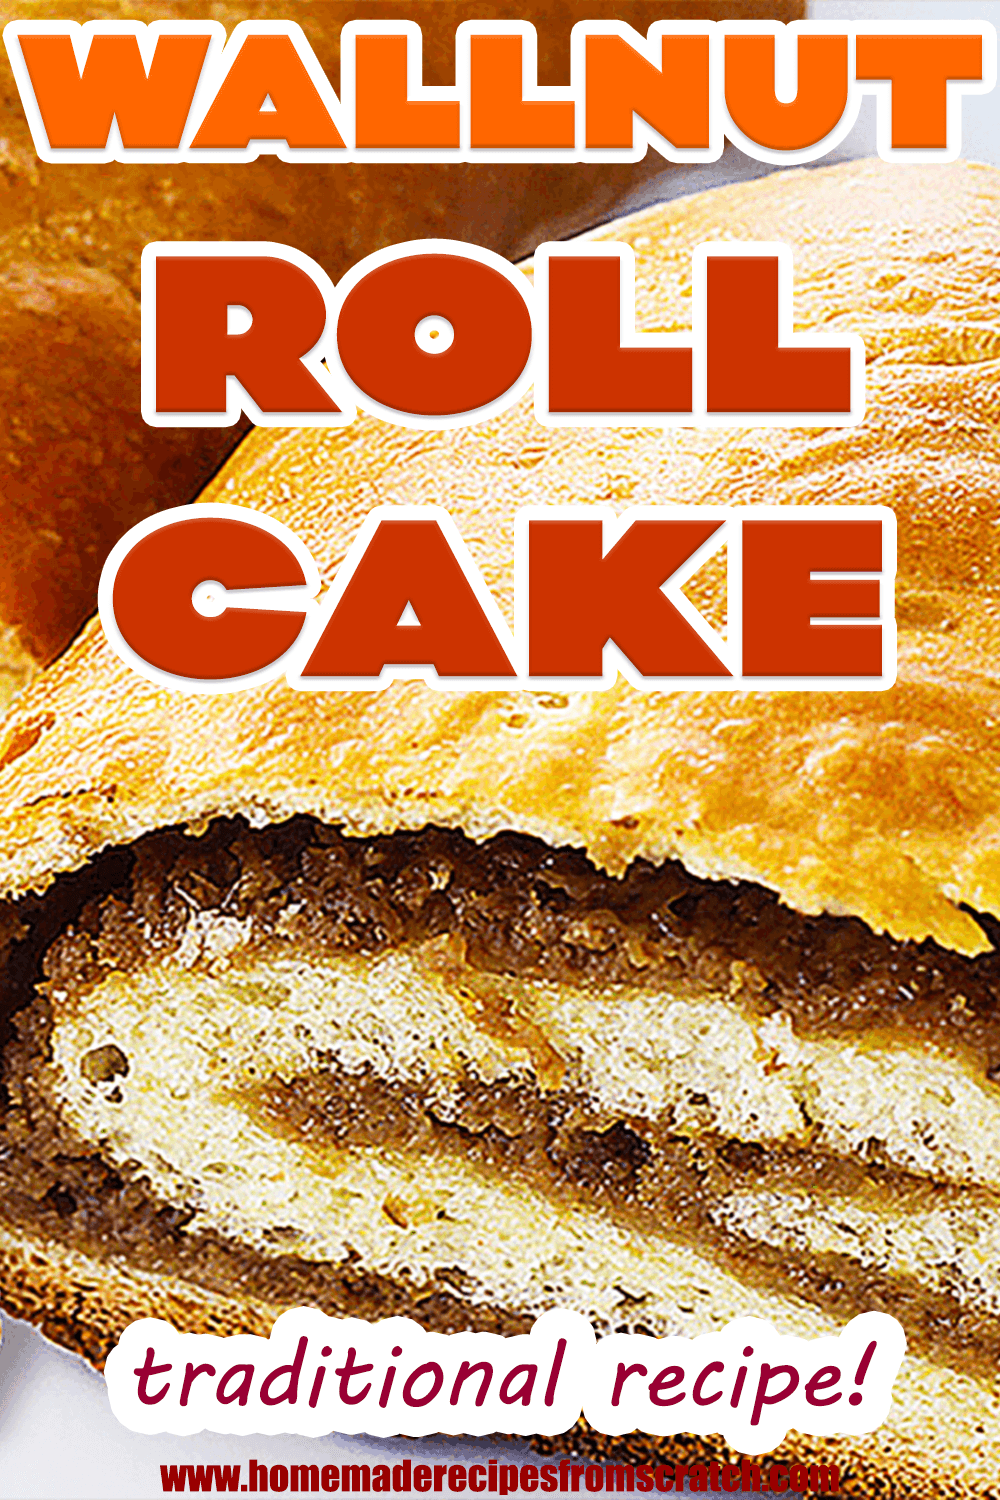 Walnut Roll Cake